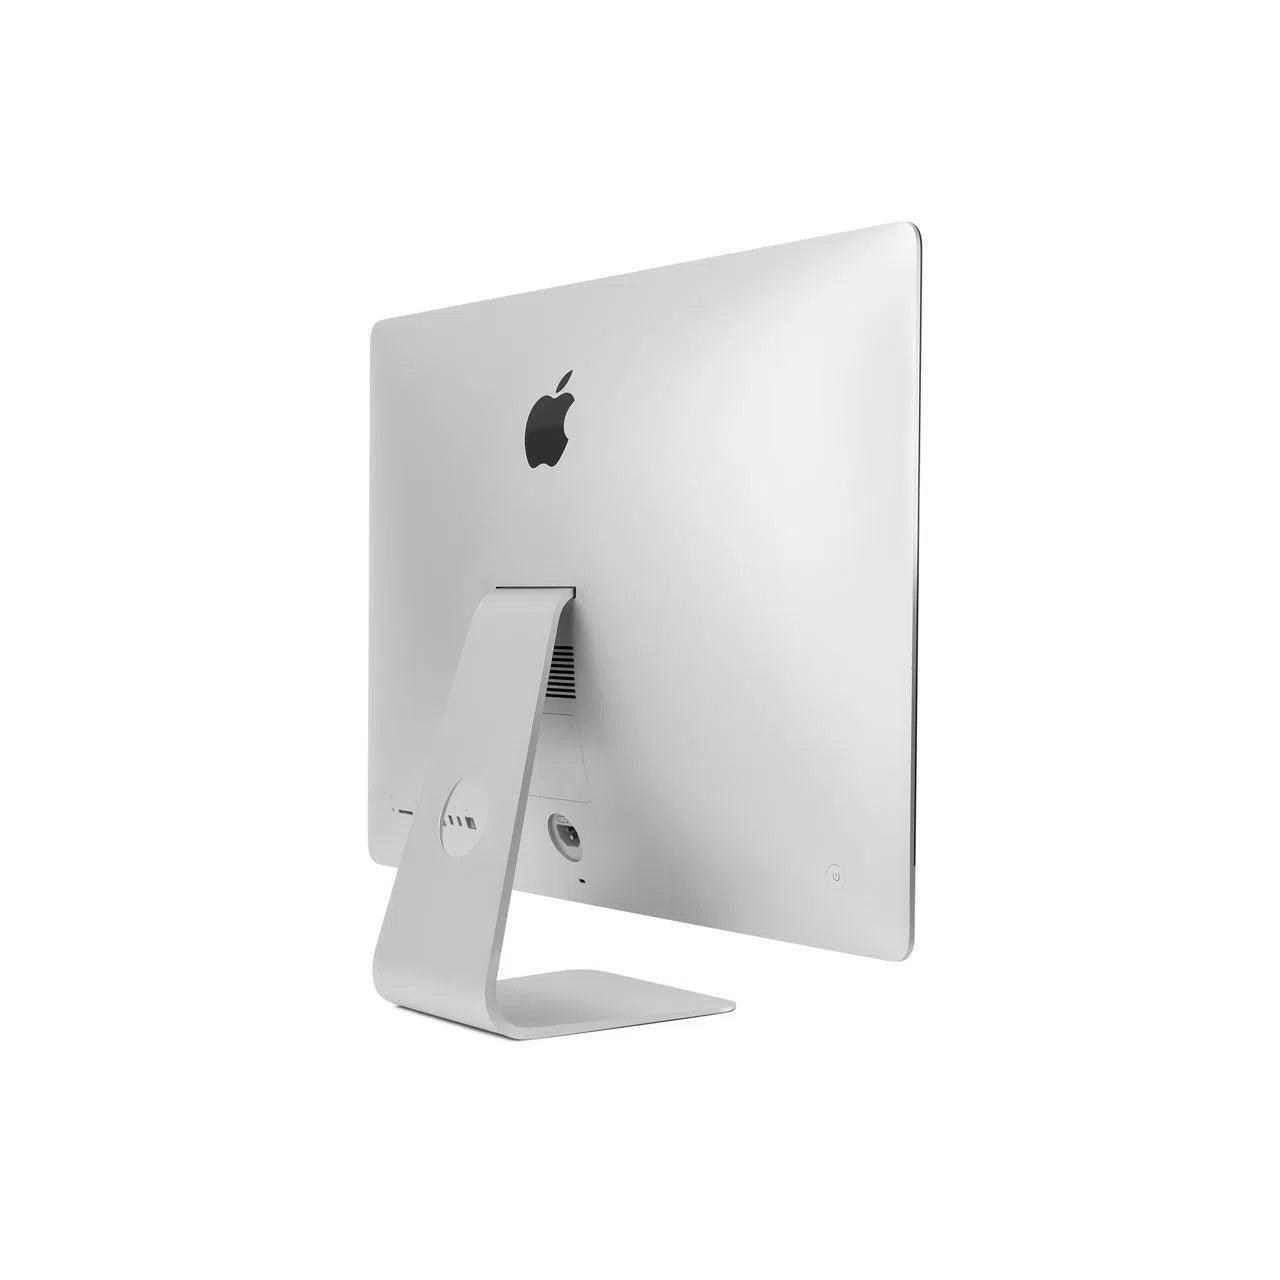 Apple iMac 27-Inch A1419 Core i7 4.0Ghz (2014)